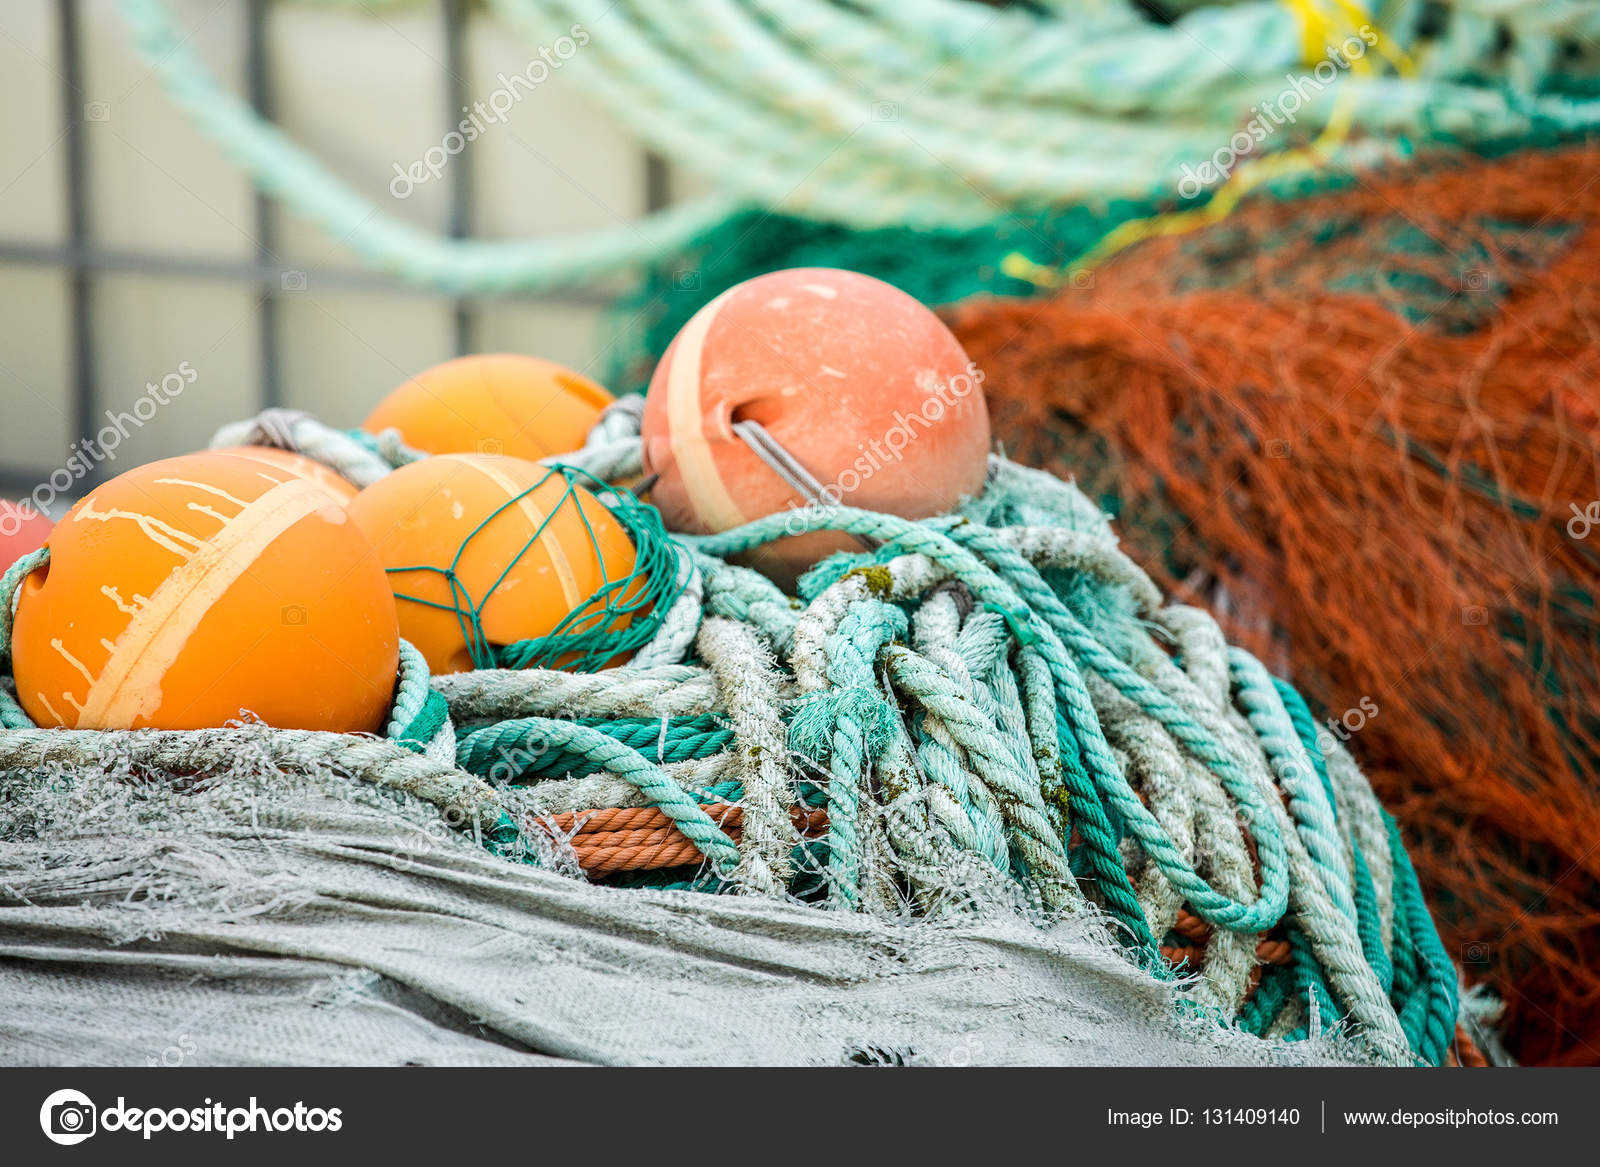 Fishing nets and floats on wooden dock — Stock Photo © Scharfsinn